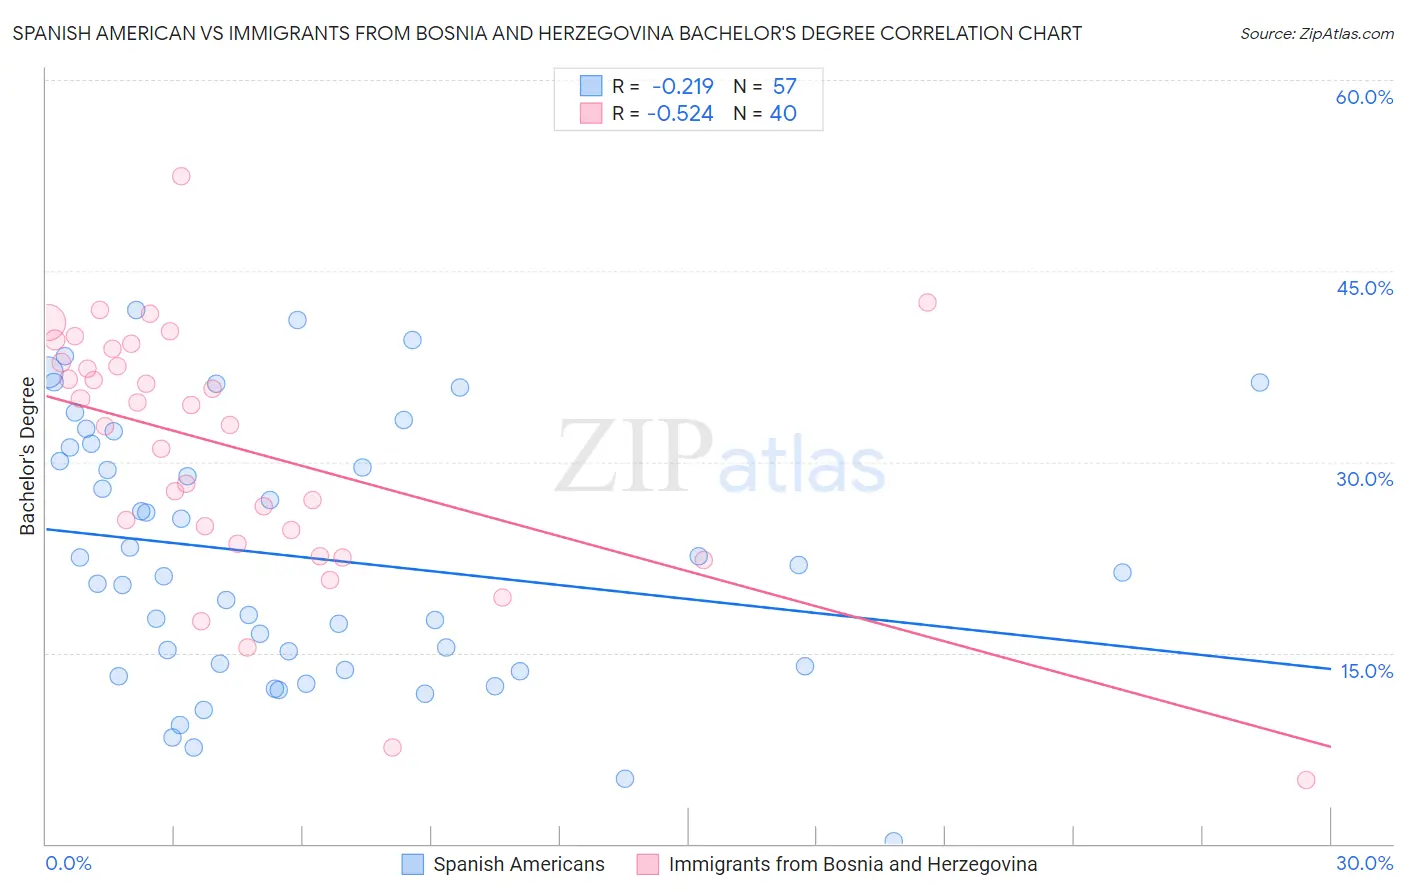 Spanish American vs Immigrants from Bosnia and Herzegovina Bachelor's Degree